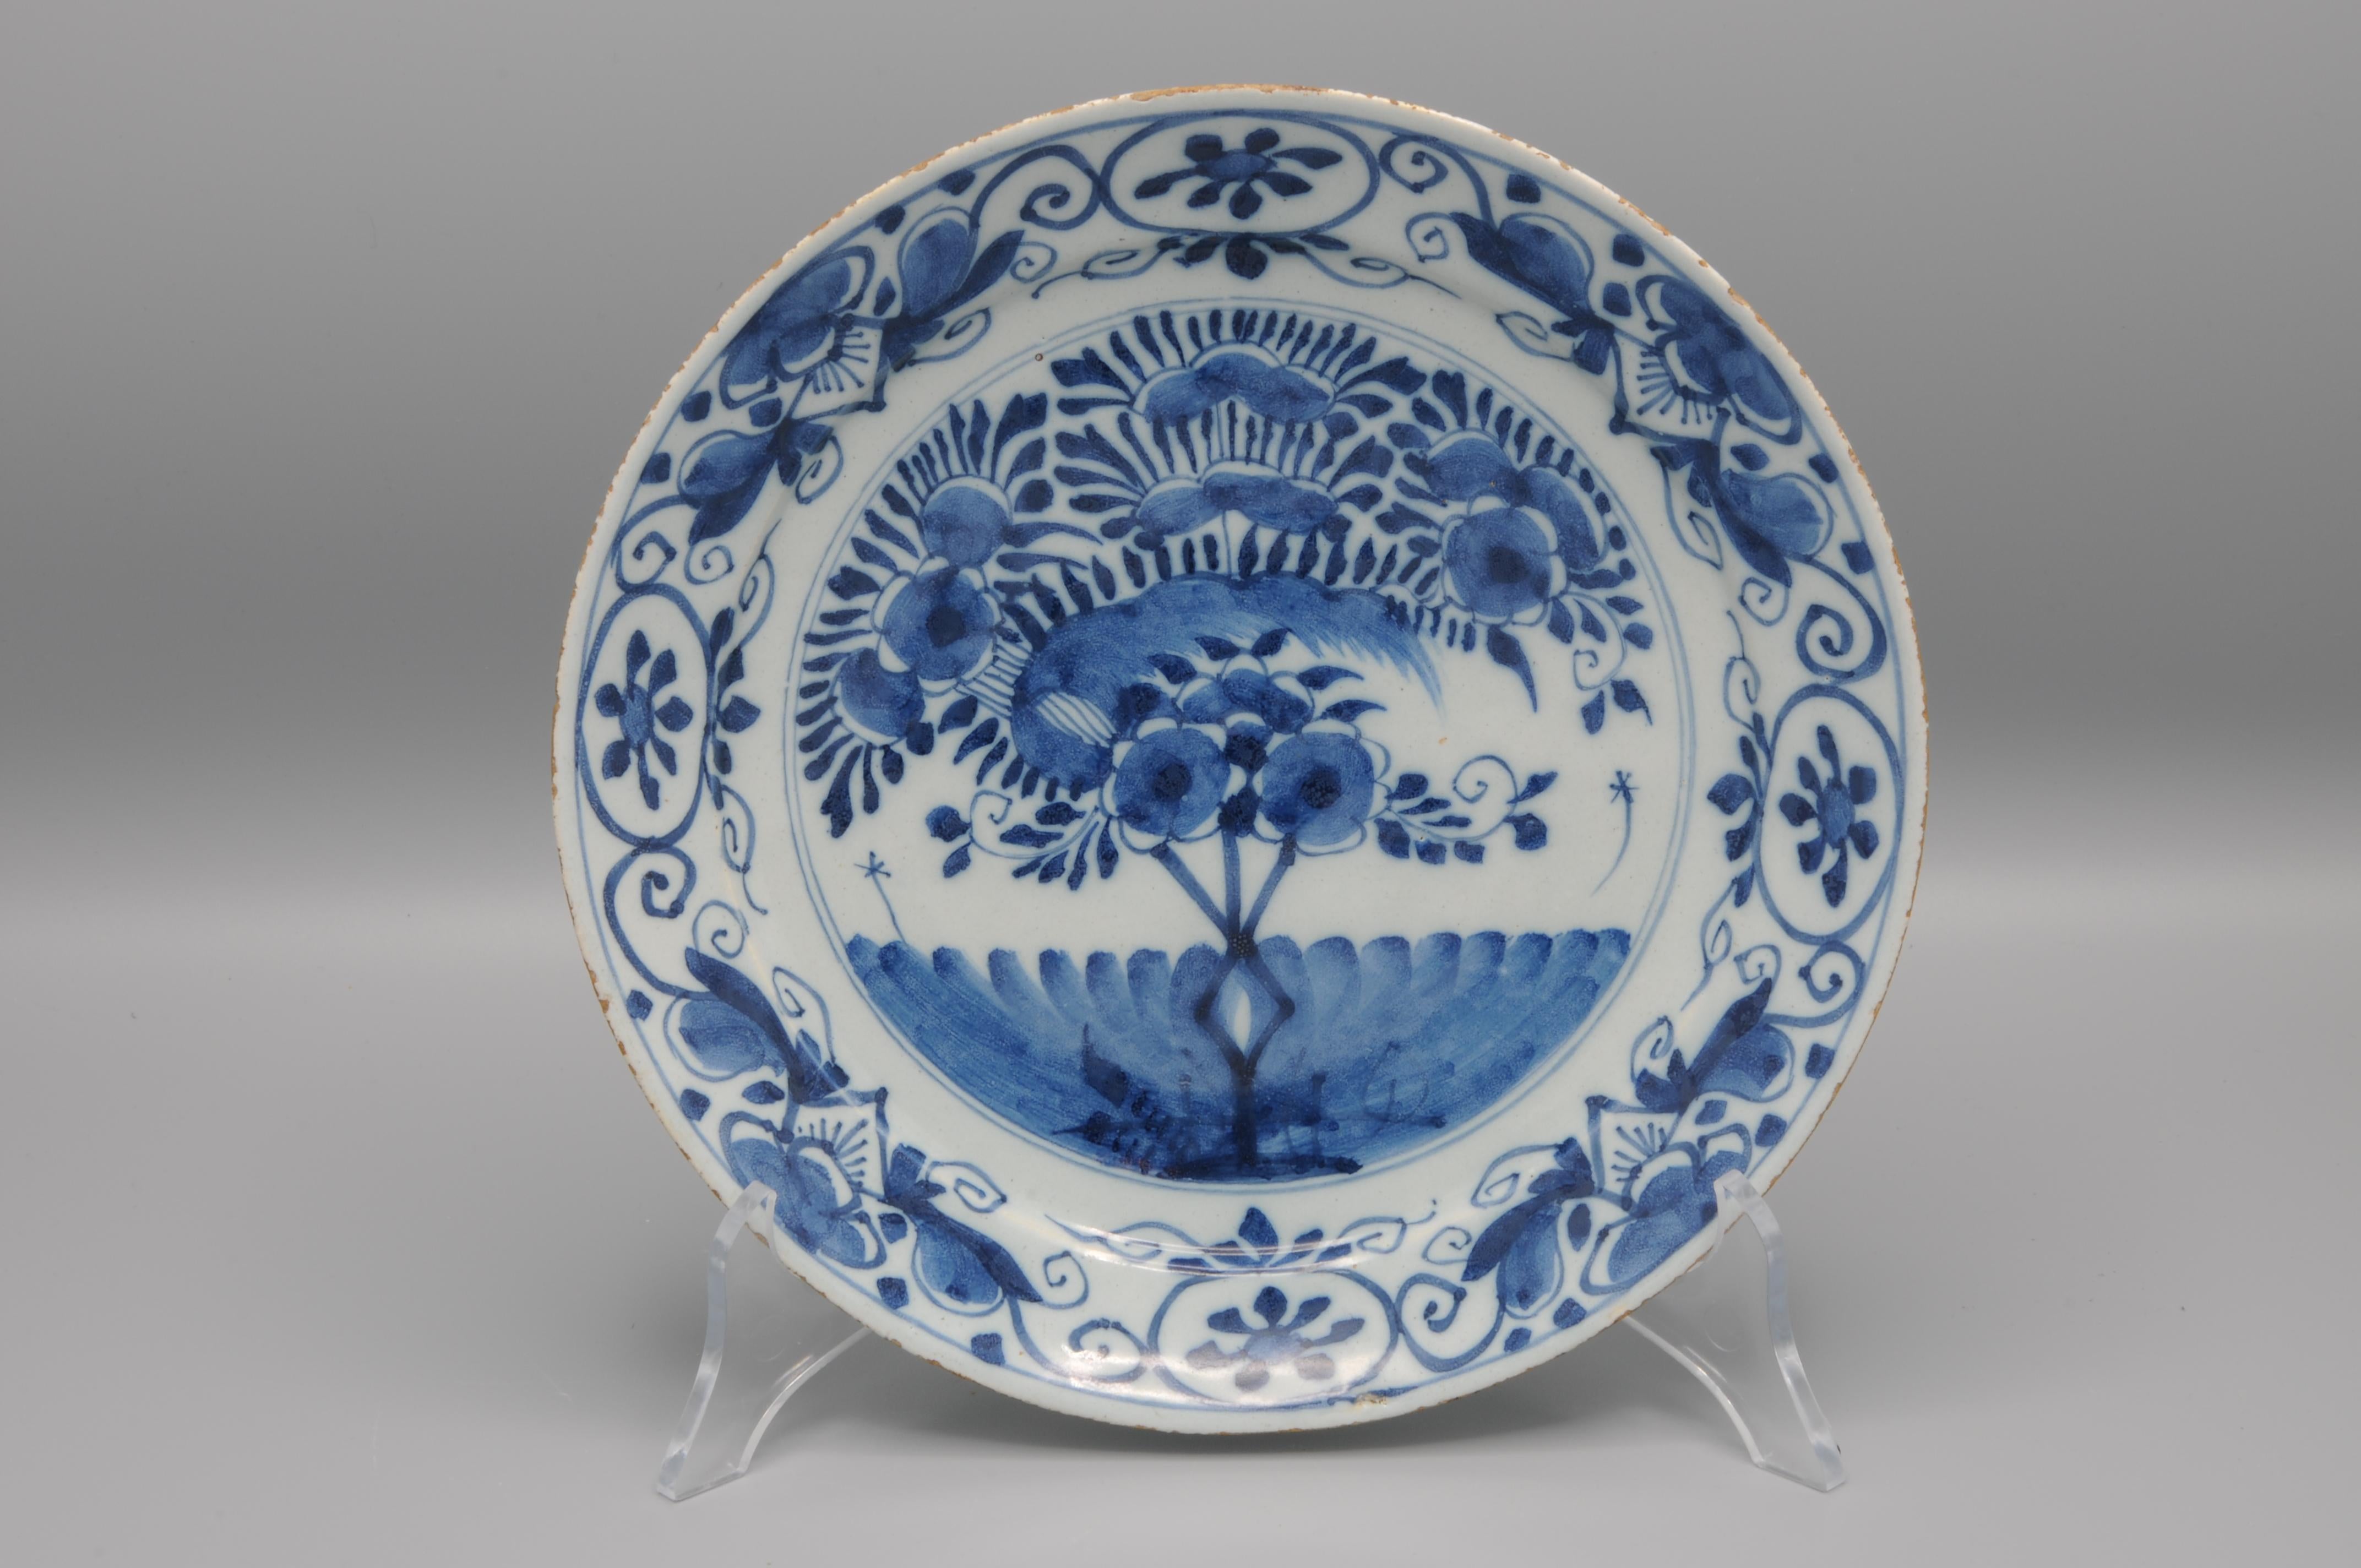 Delft Blue set of 'Tea Tree' plates - mid 18th century For Sale 2